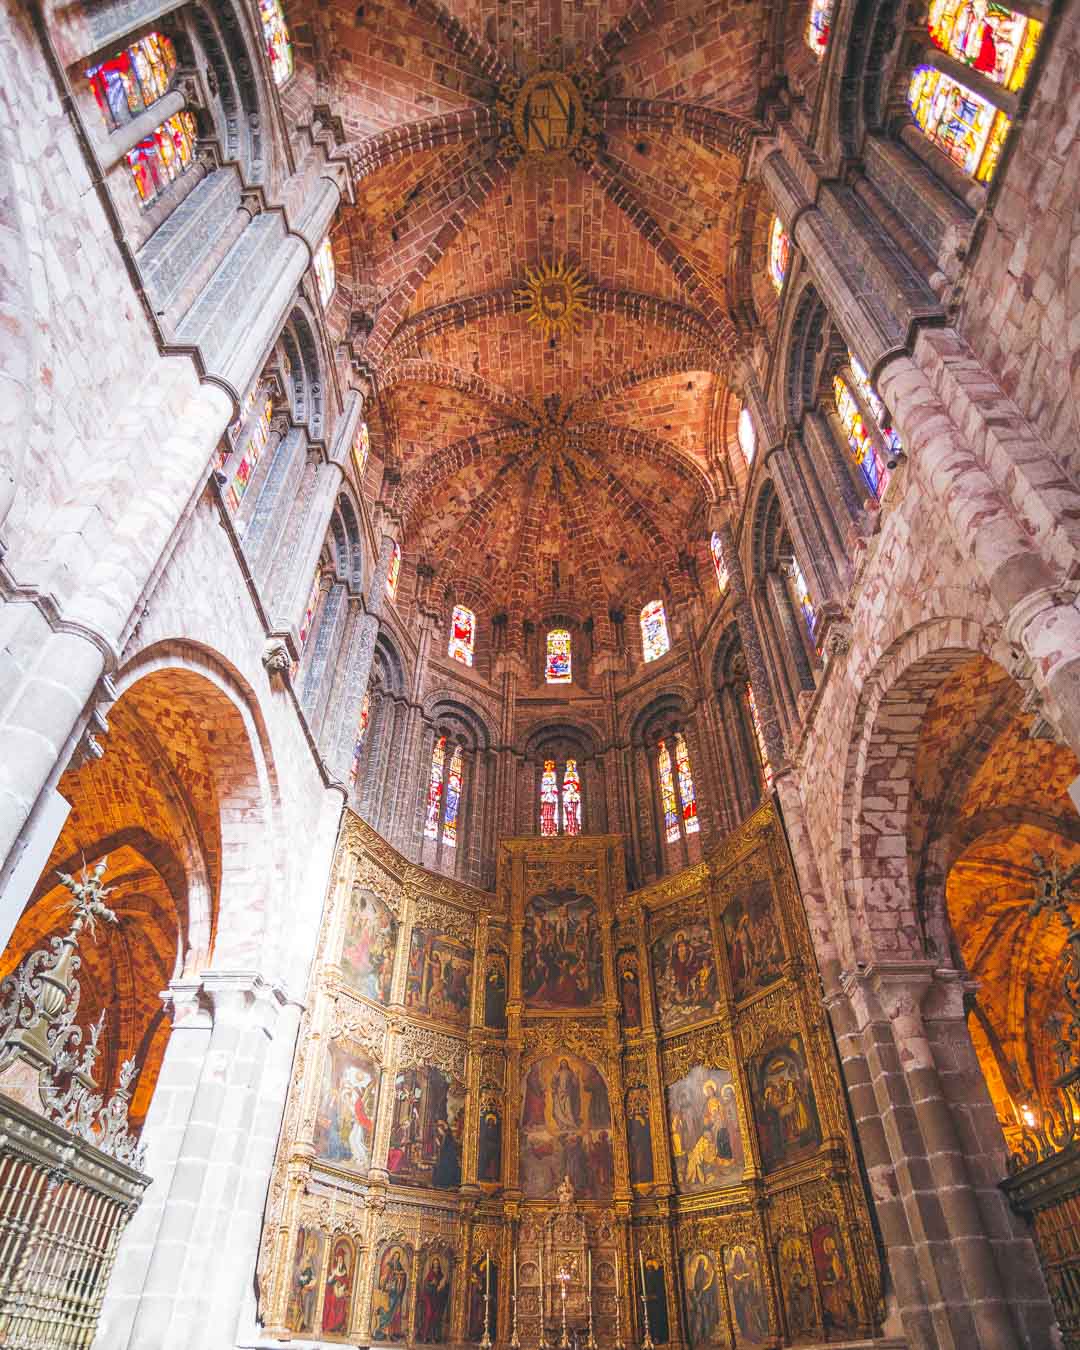 golden paintings decorating the catedral de avila